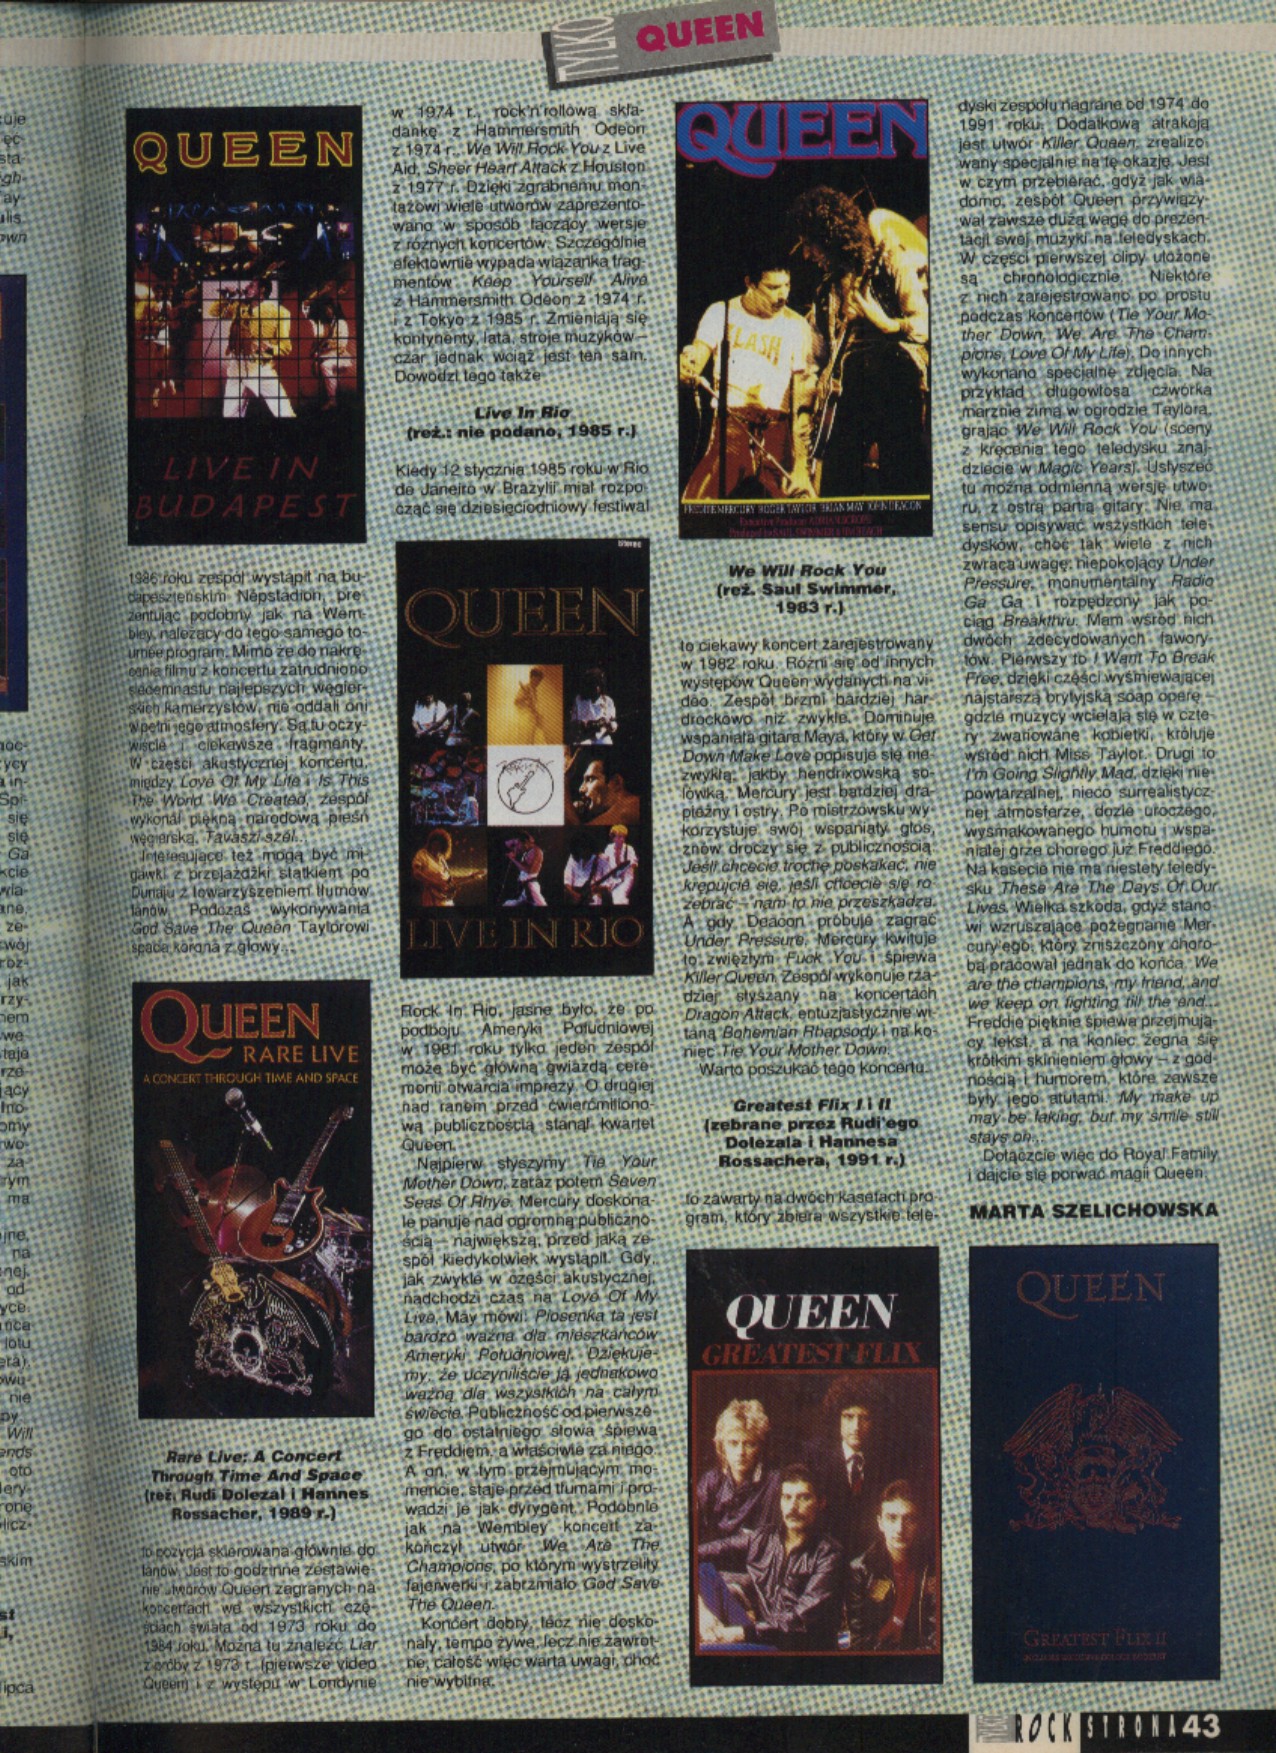 Artykuły z gazet o Queen - wkladka14.jpg